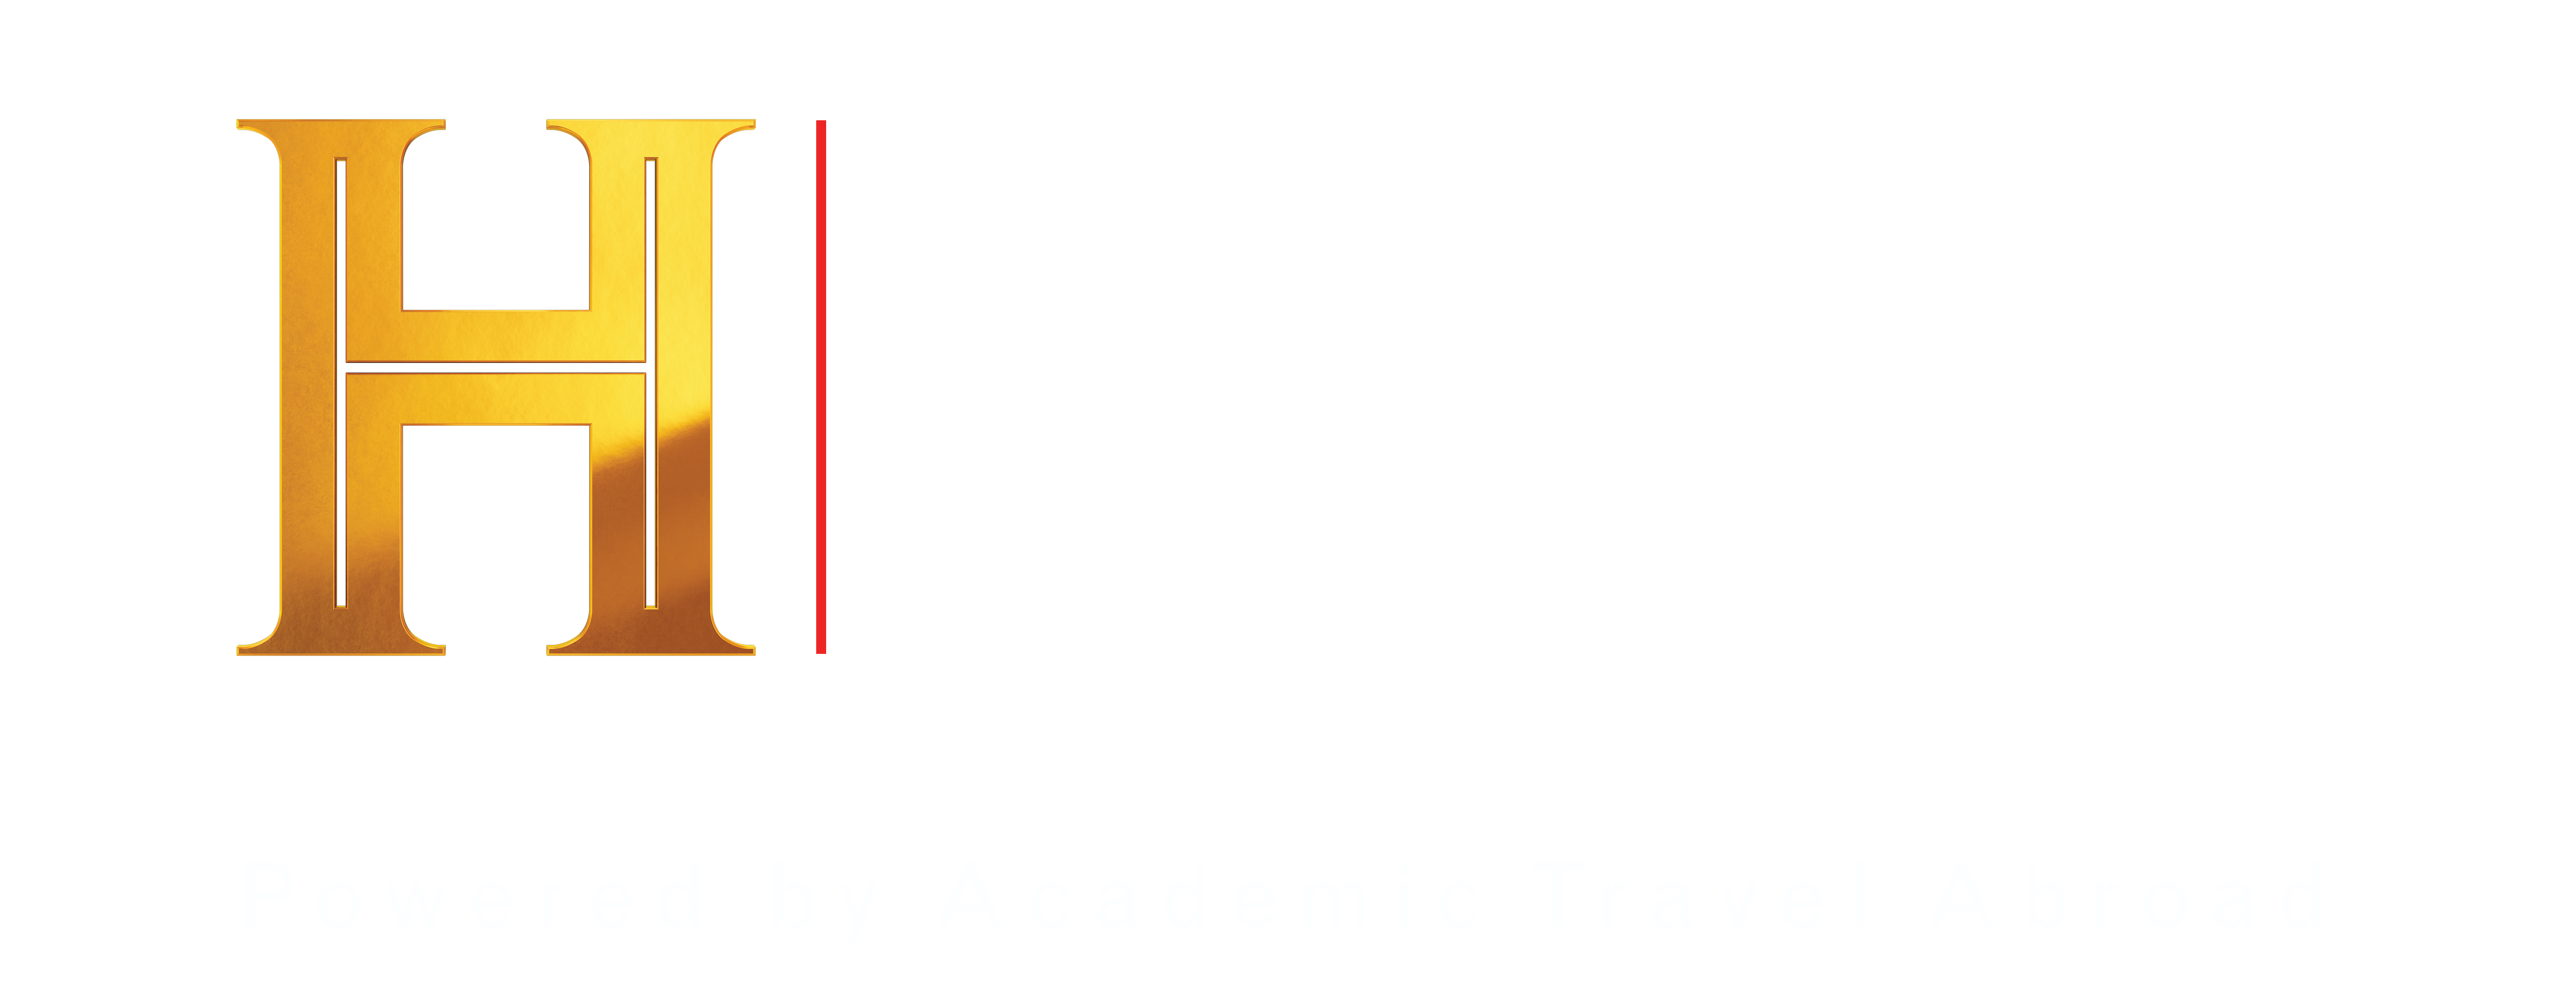 history travel blog